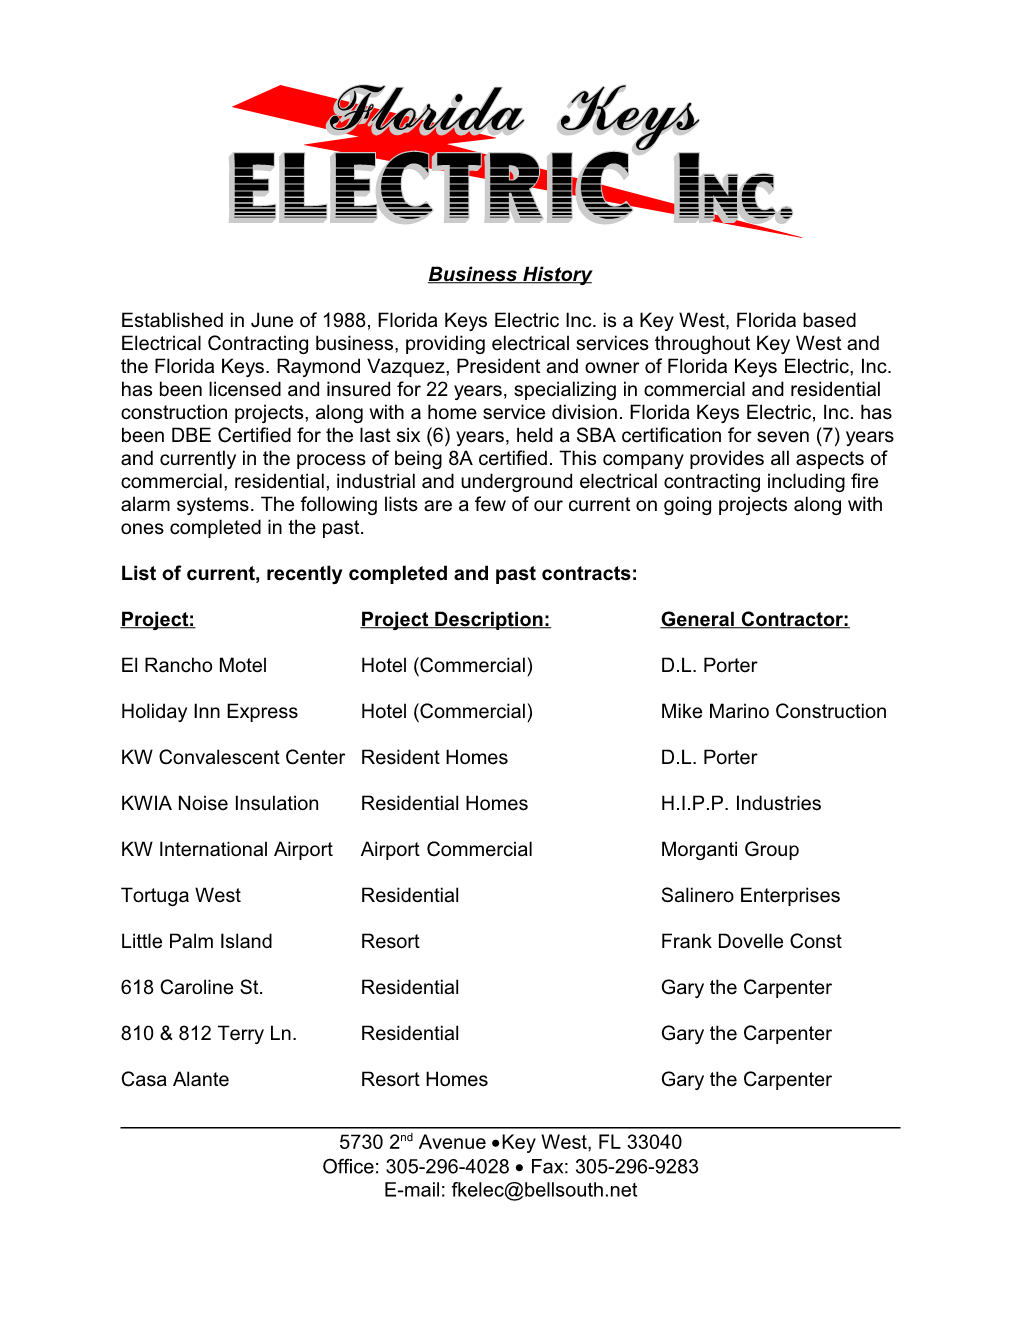 Florida Keys Electric, Inc